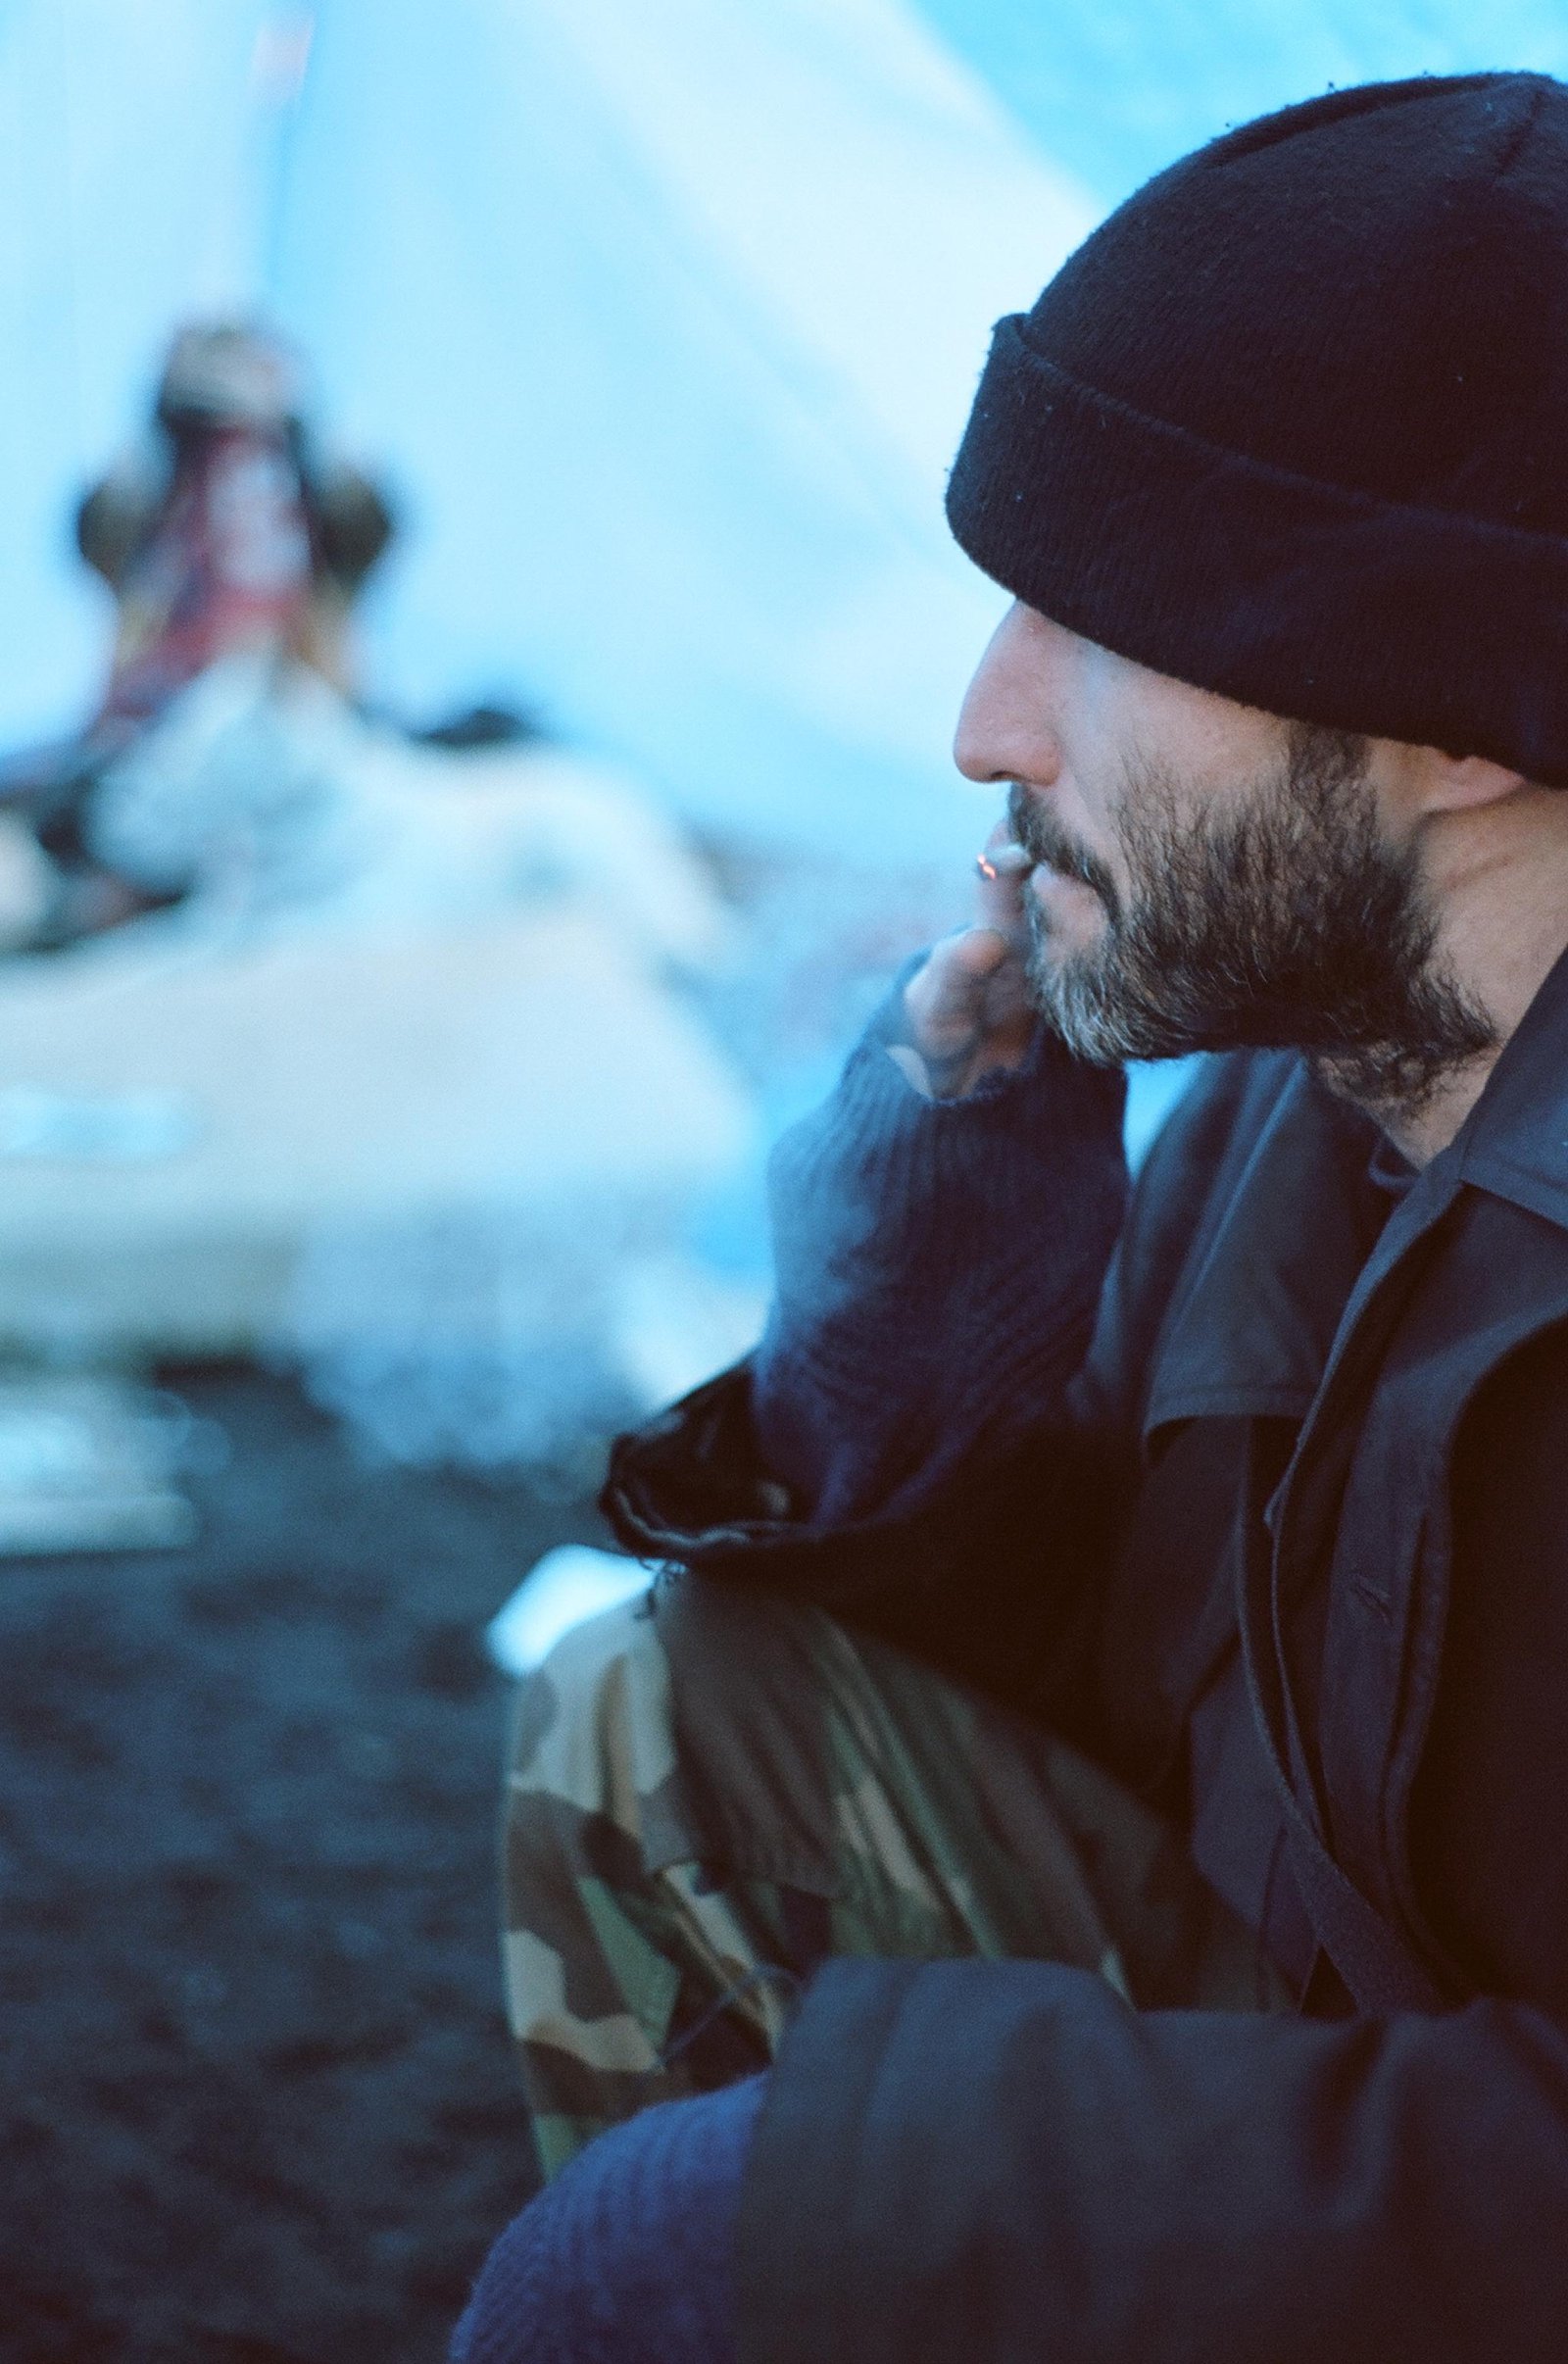 Homeless guy smoking reefer